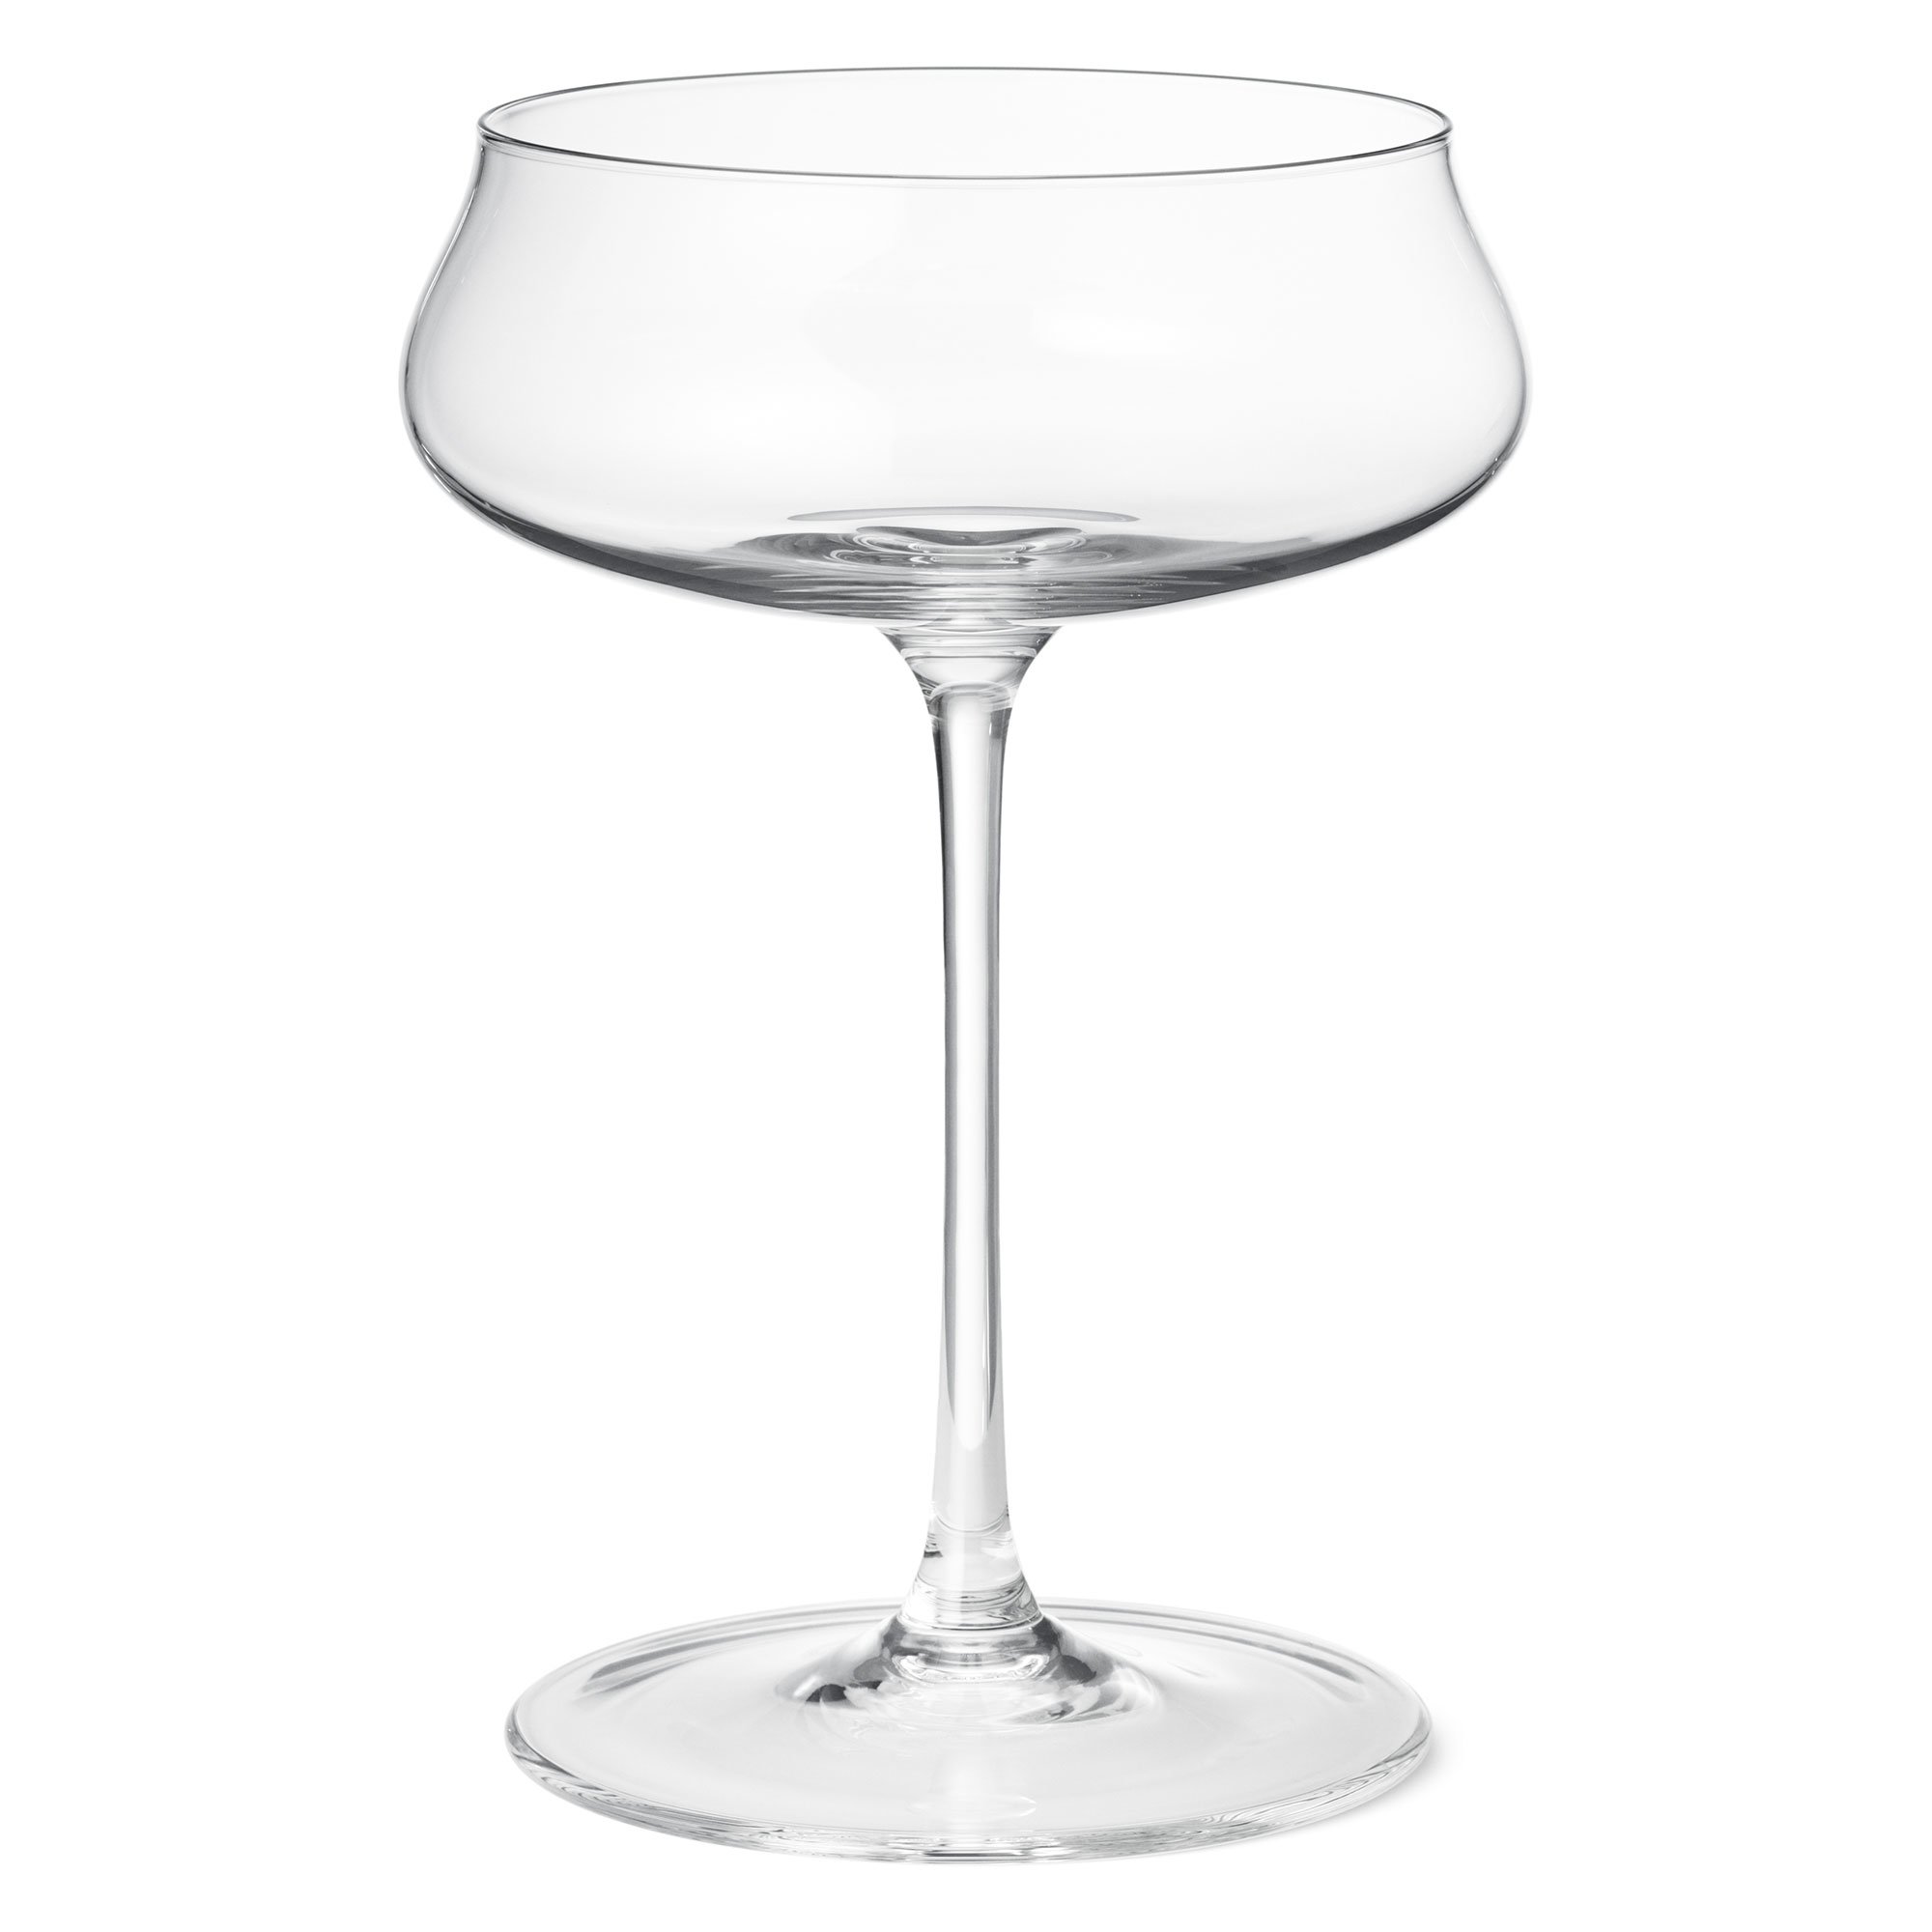 Georg Jensen Sky cocktailglass, 0.25 liter, 2-pack Cocktailglass